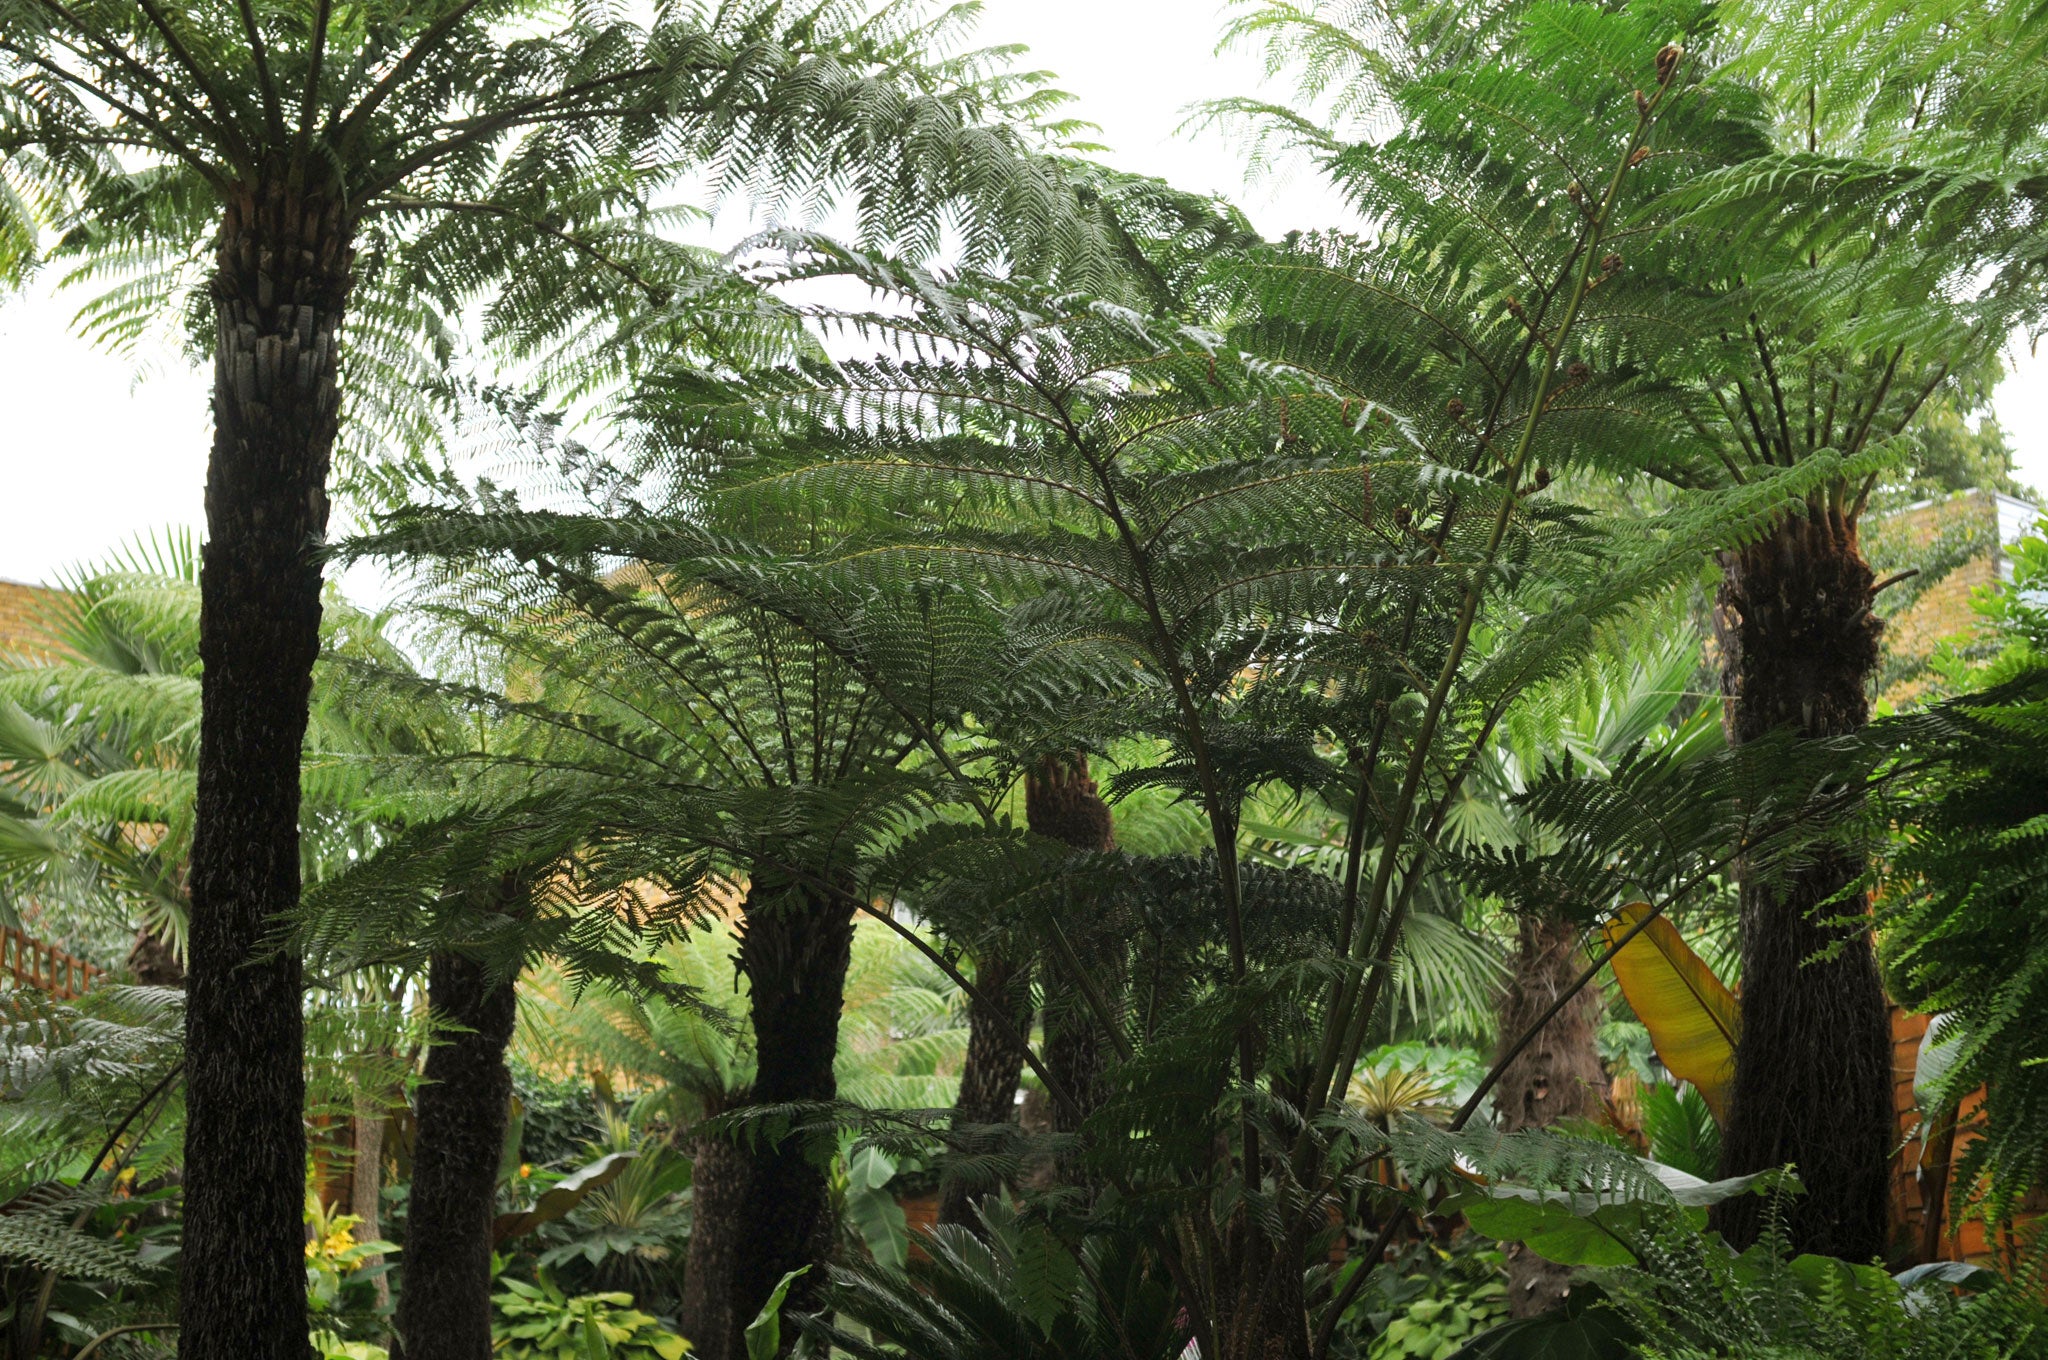 Patrick de Nangle's carefully nursed tree ferns, 'Cyathea australis'